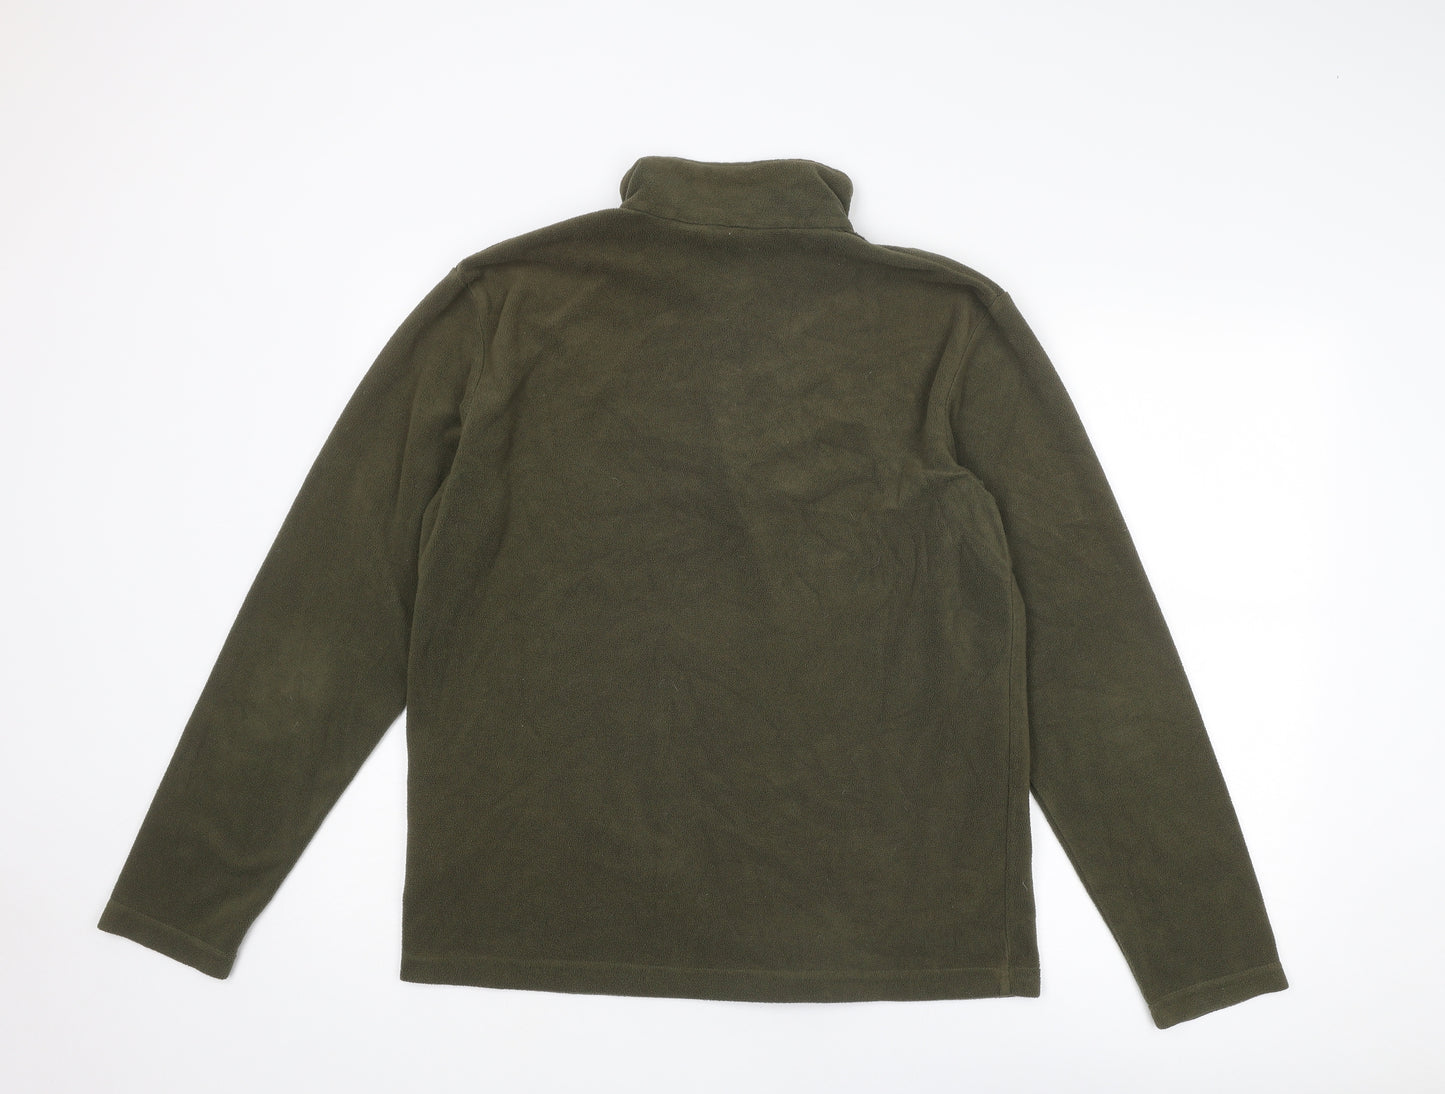 Regatta Mens Brown Polyester Pullover Sweatshirt Size L